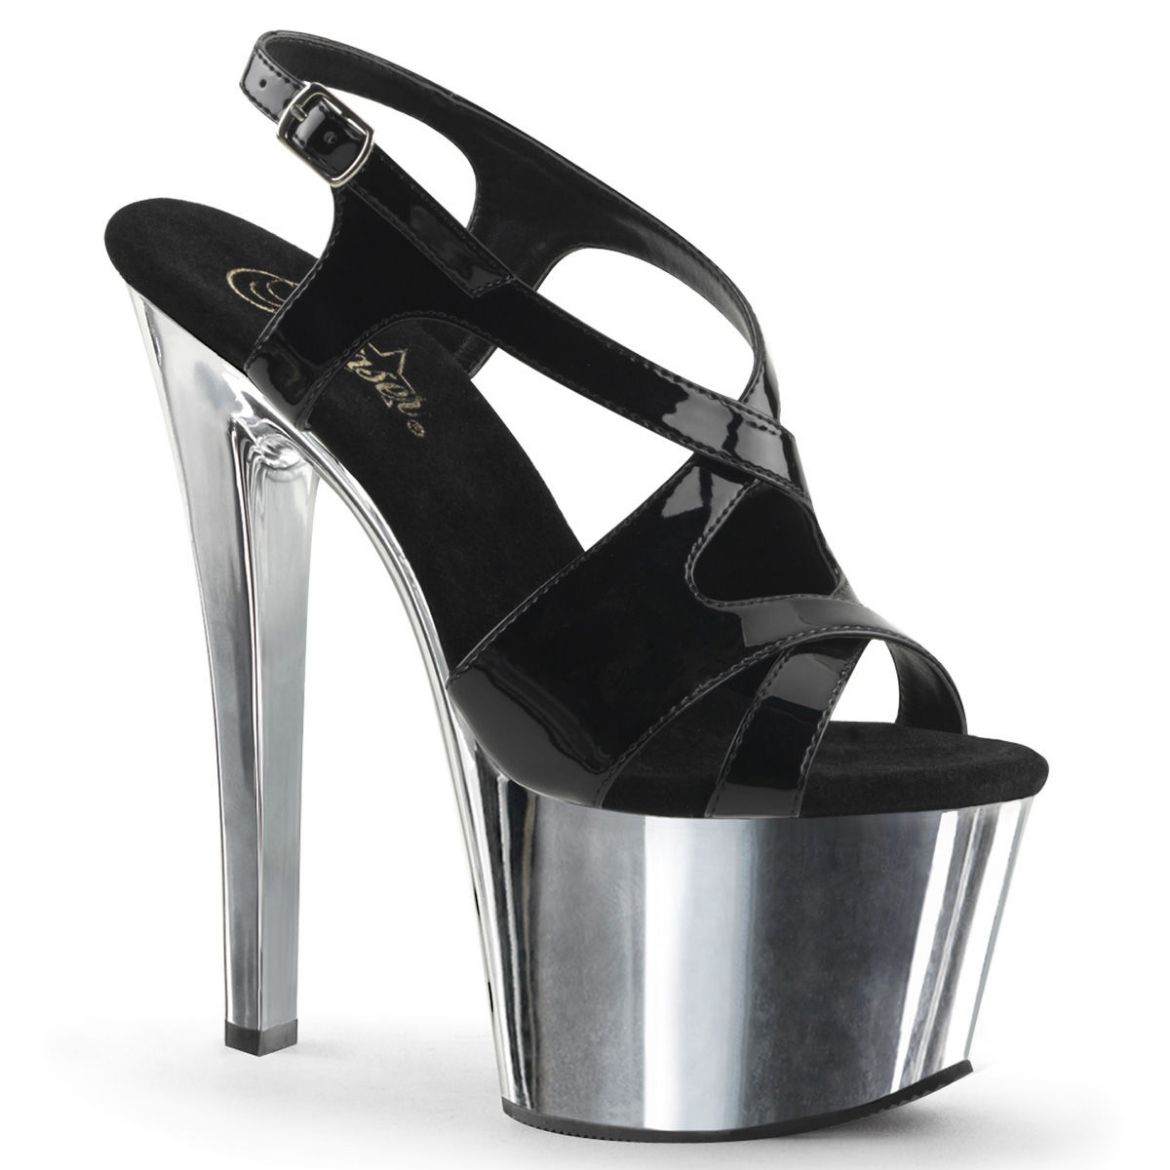 Product image of Pleaser SKY-330 Black Patent/Silver Chrome 7 inch (17.8 cm)Heel 2 3/4 inch (7 cm) Chrome Platform Criss-Cross Sling Back Sandal Shoes